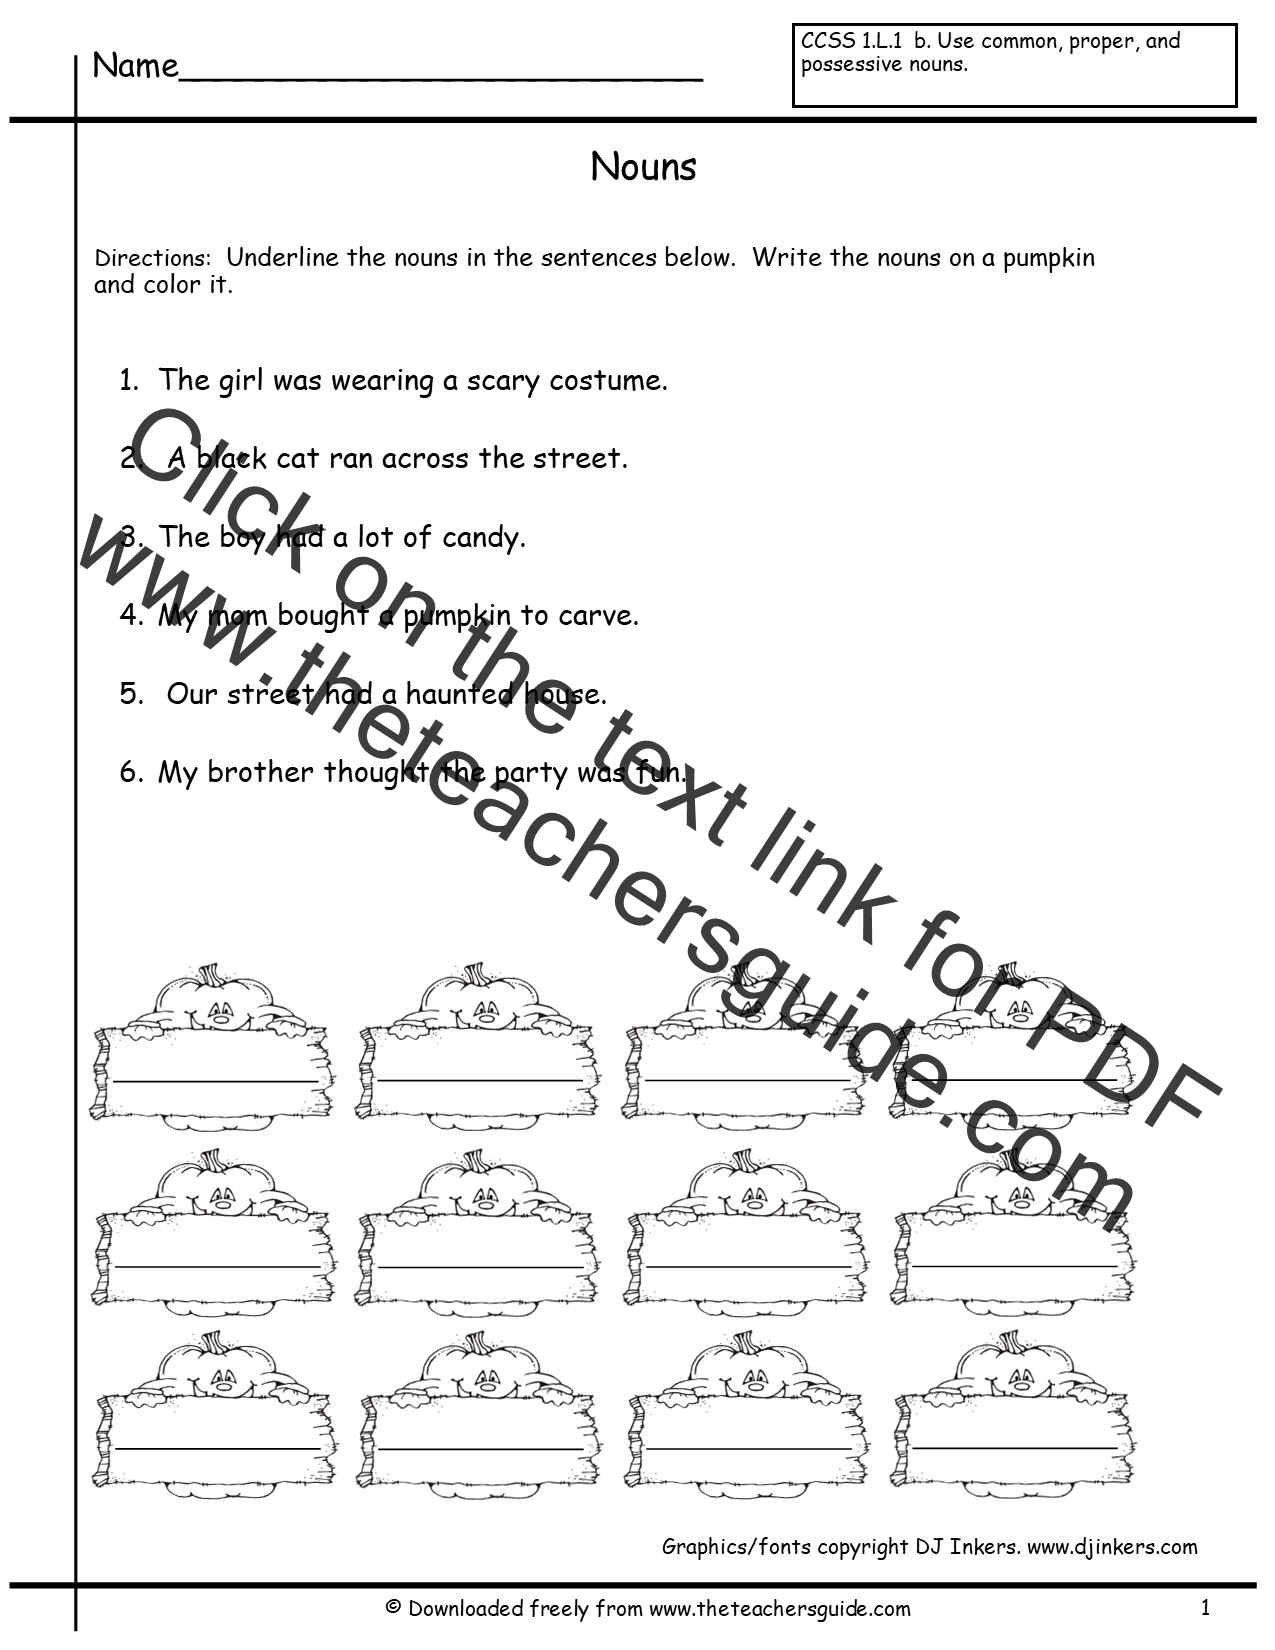 nouns-worksheets-and-printouts